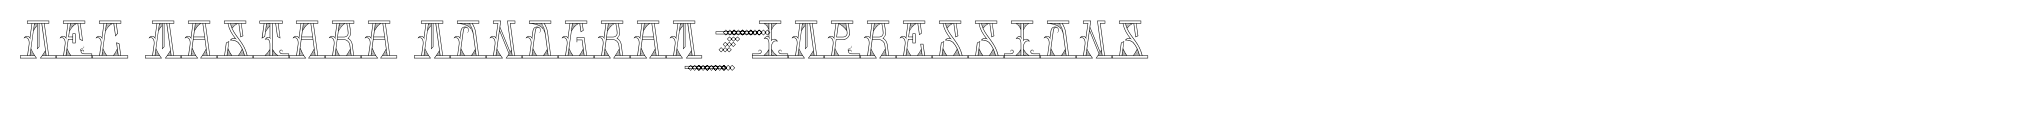 MFC Mastaba Monogram 1000 Impressions image